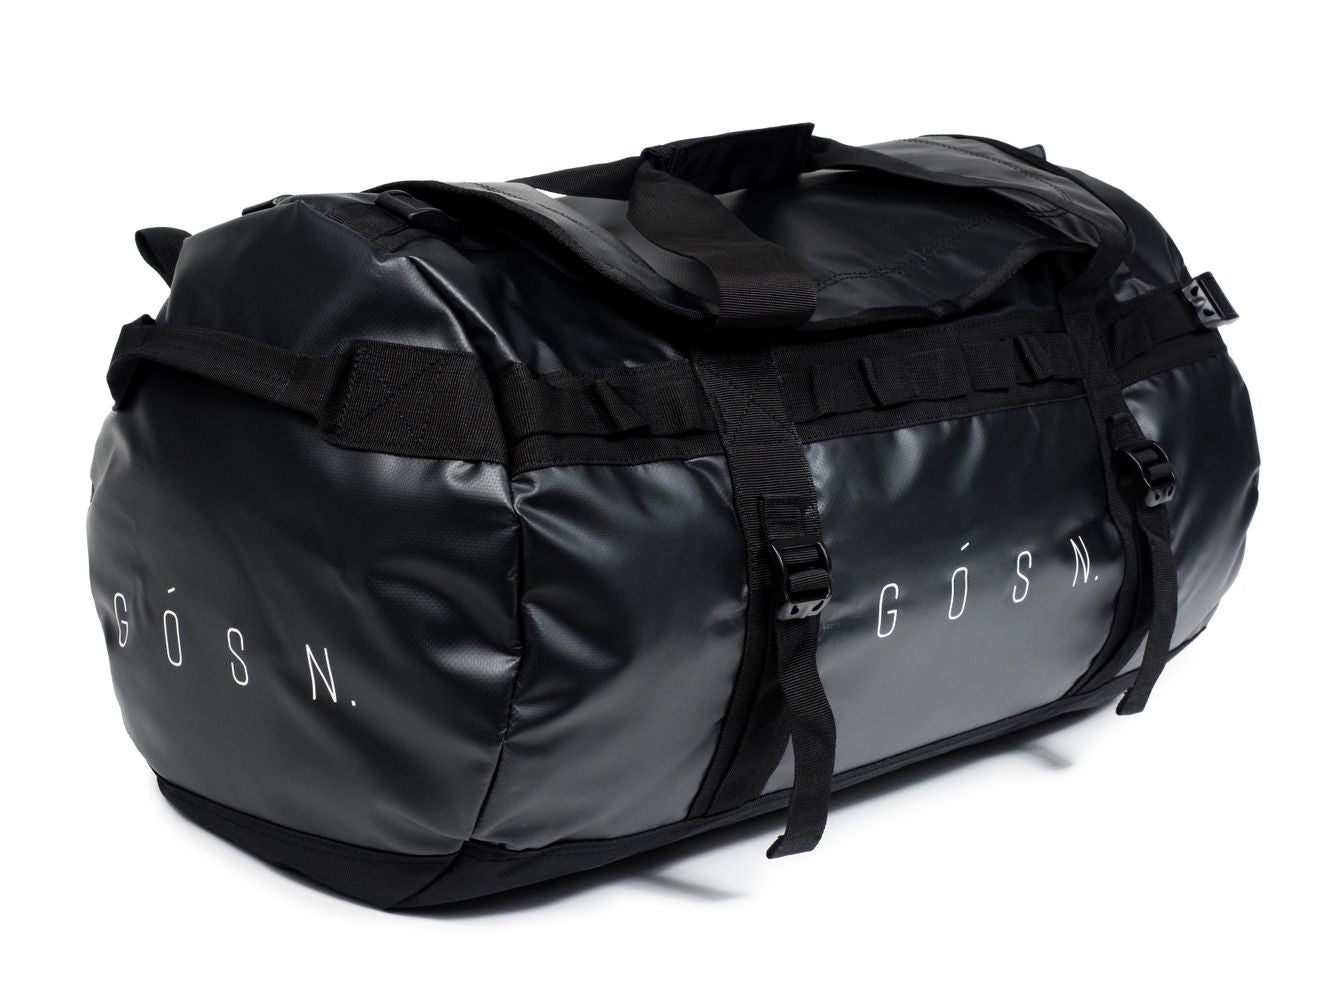 70L Travel Duffel Bag (Black) - closed